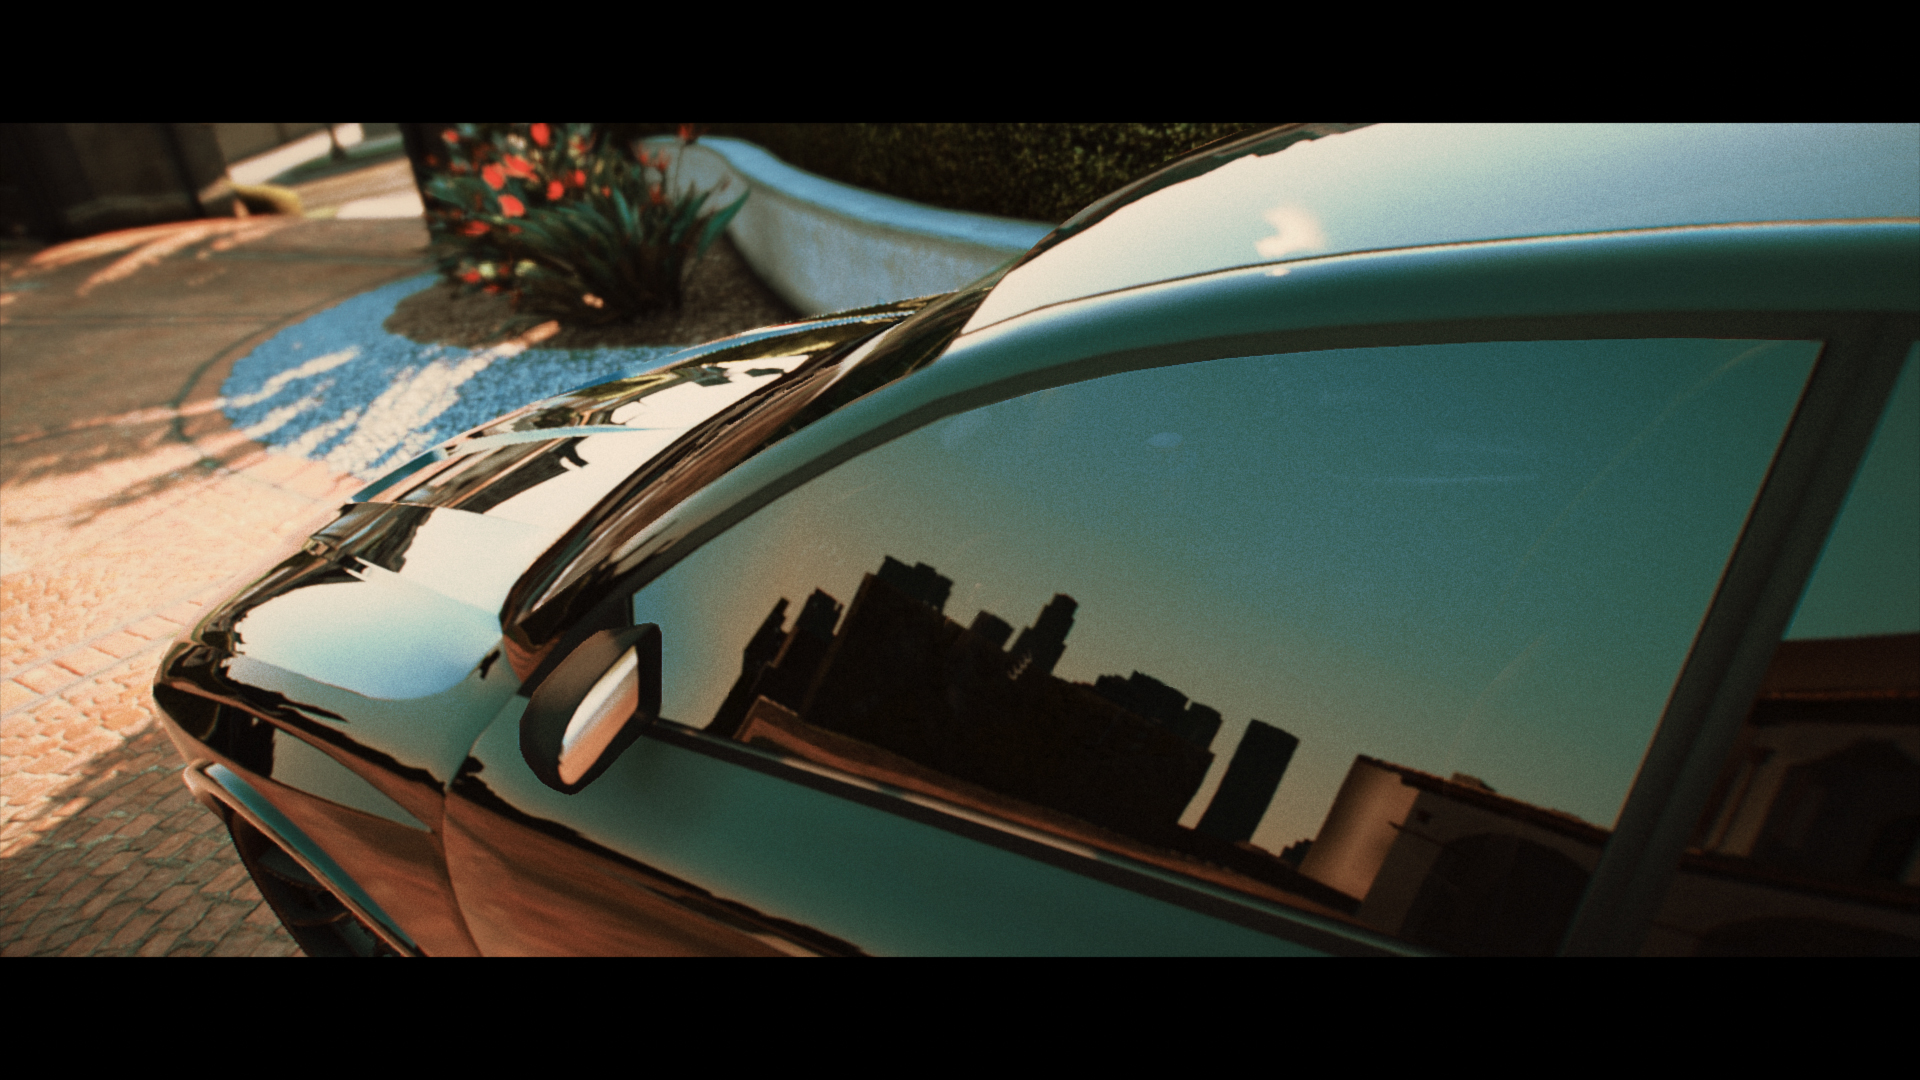 Gta 5 S Latest Hyper Realistic Visual Overhaul Mod Is Breathtaking Pc Gamer